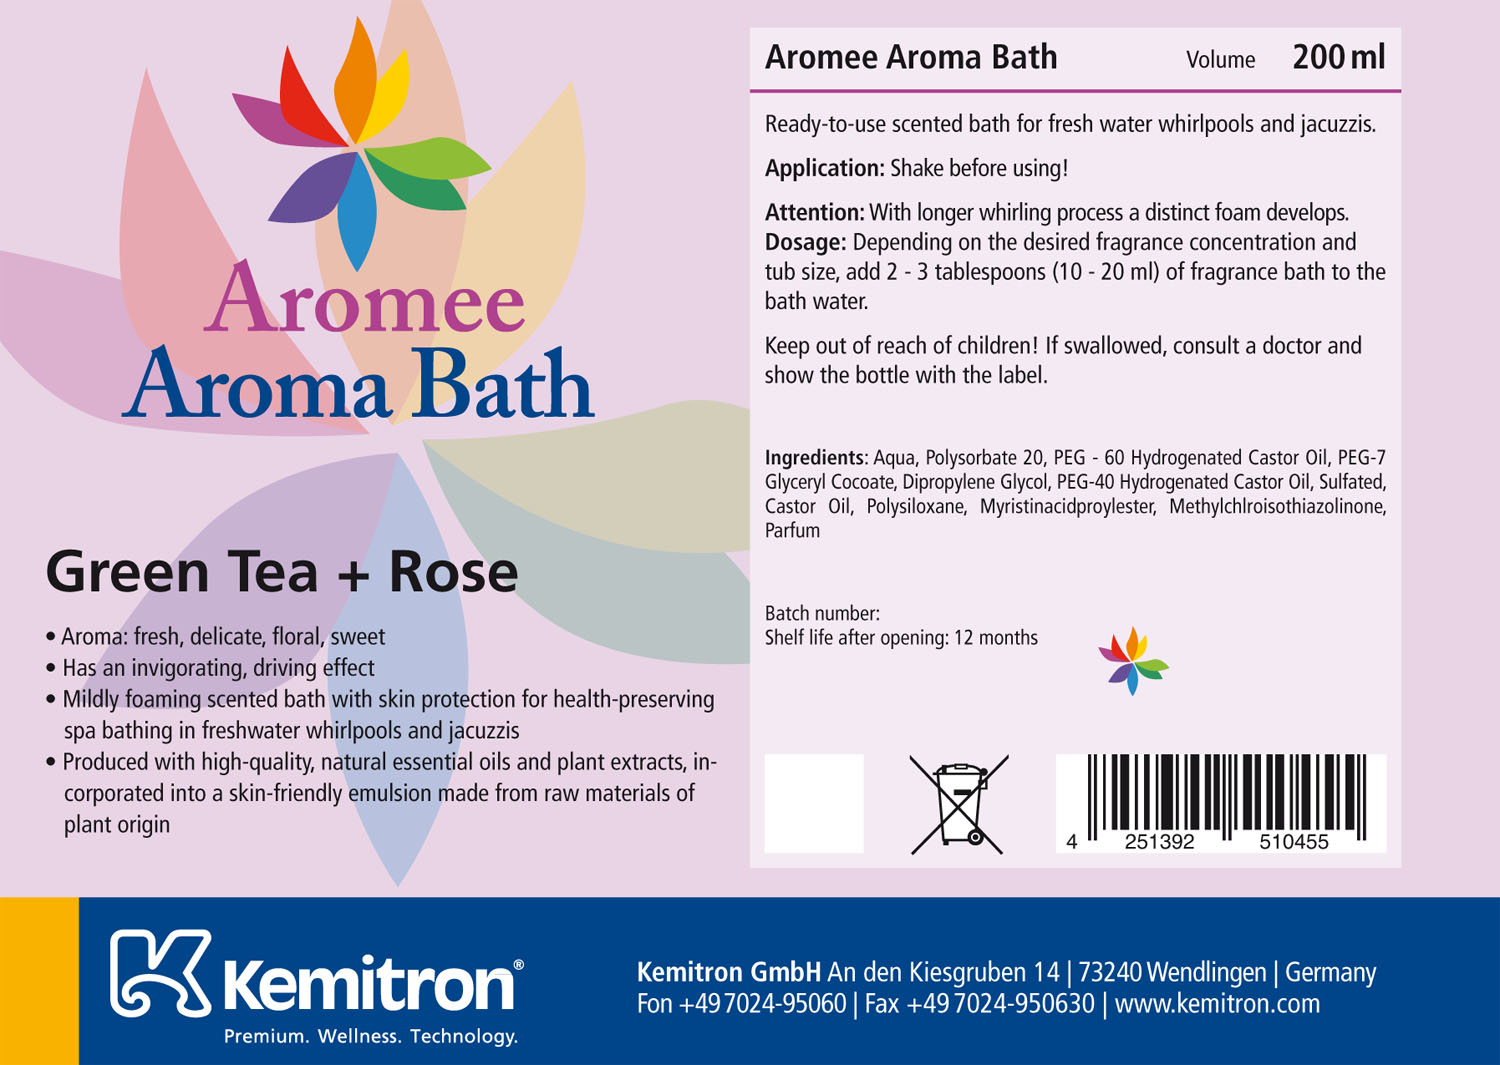 Aromee Aromabath "Green Tea + Roses"